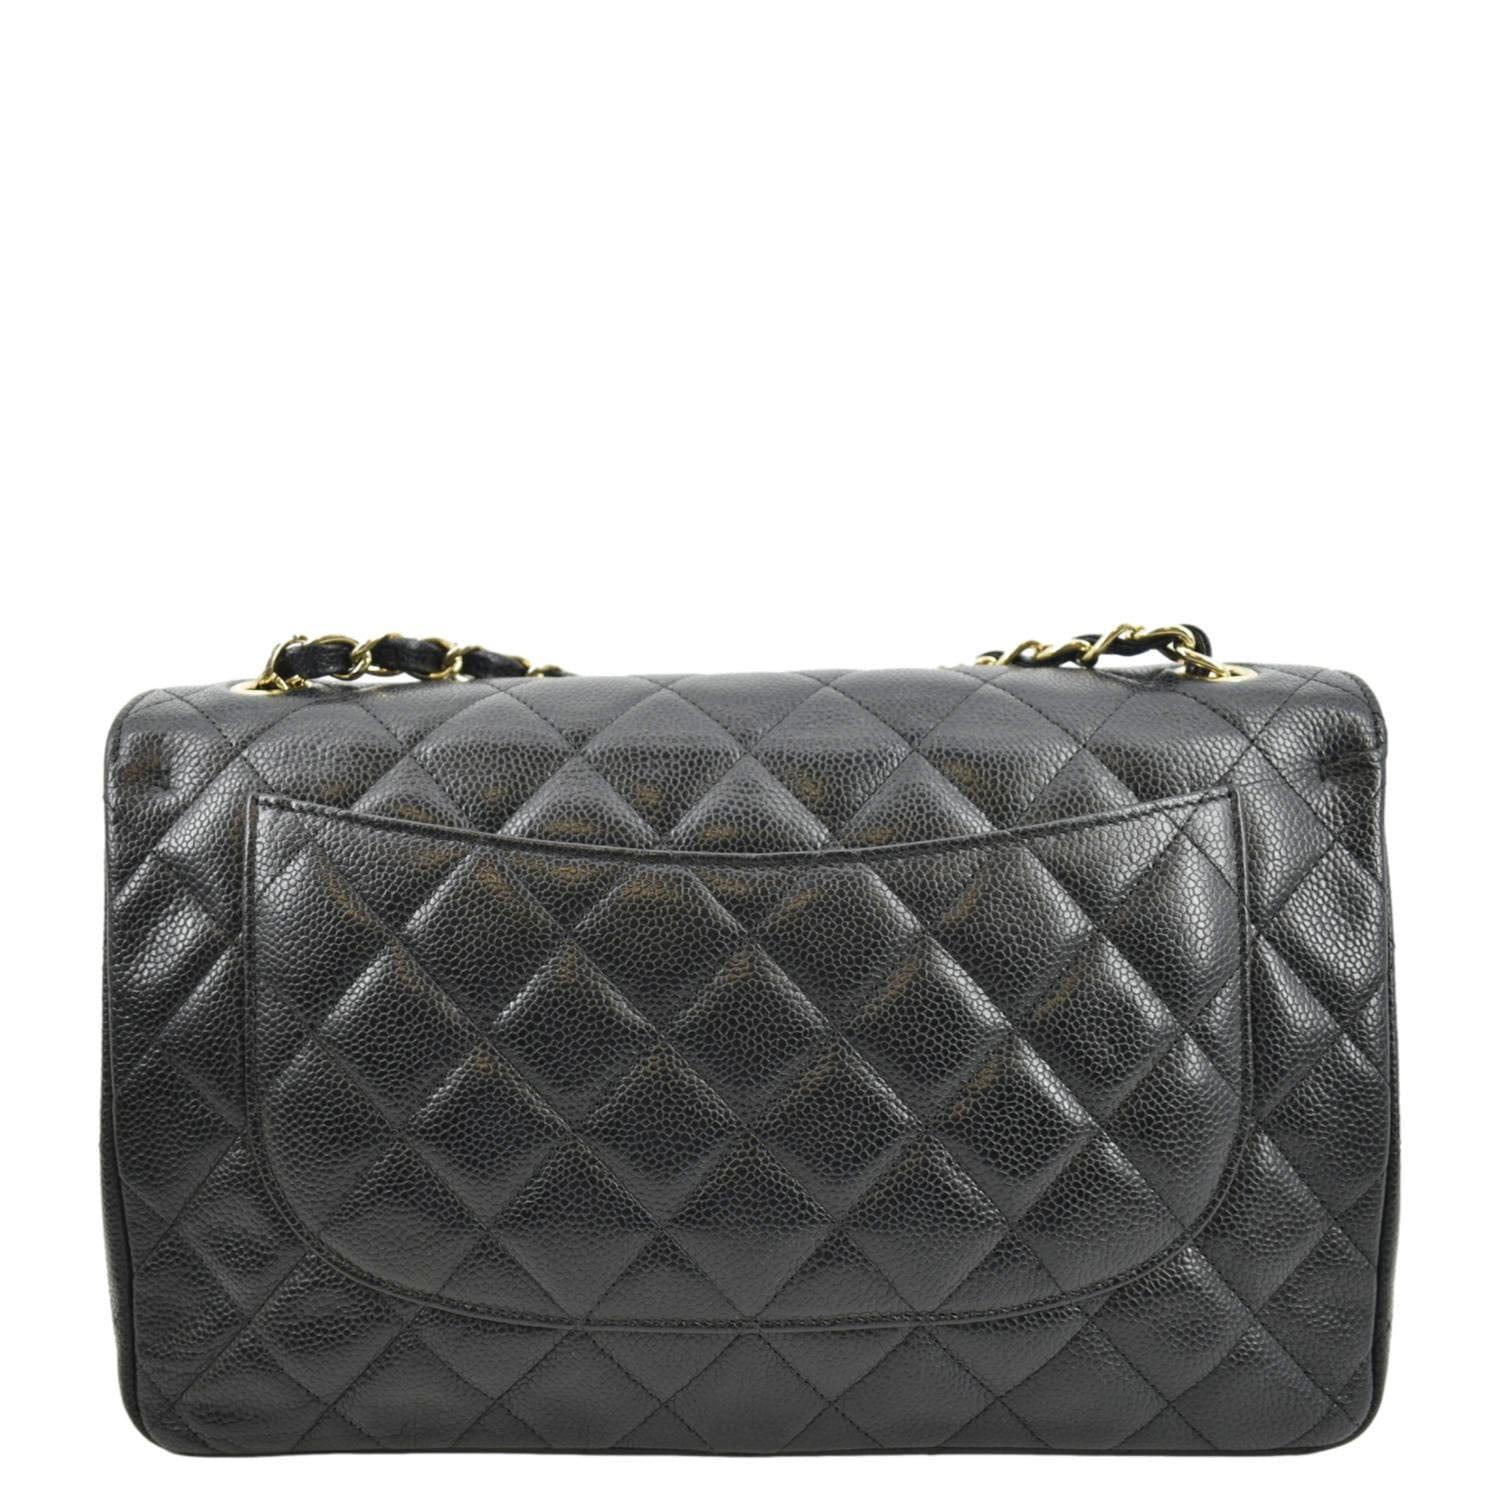 Chanel Classic Jumbo Single Flap Bag - Black Shoulder Bags